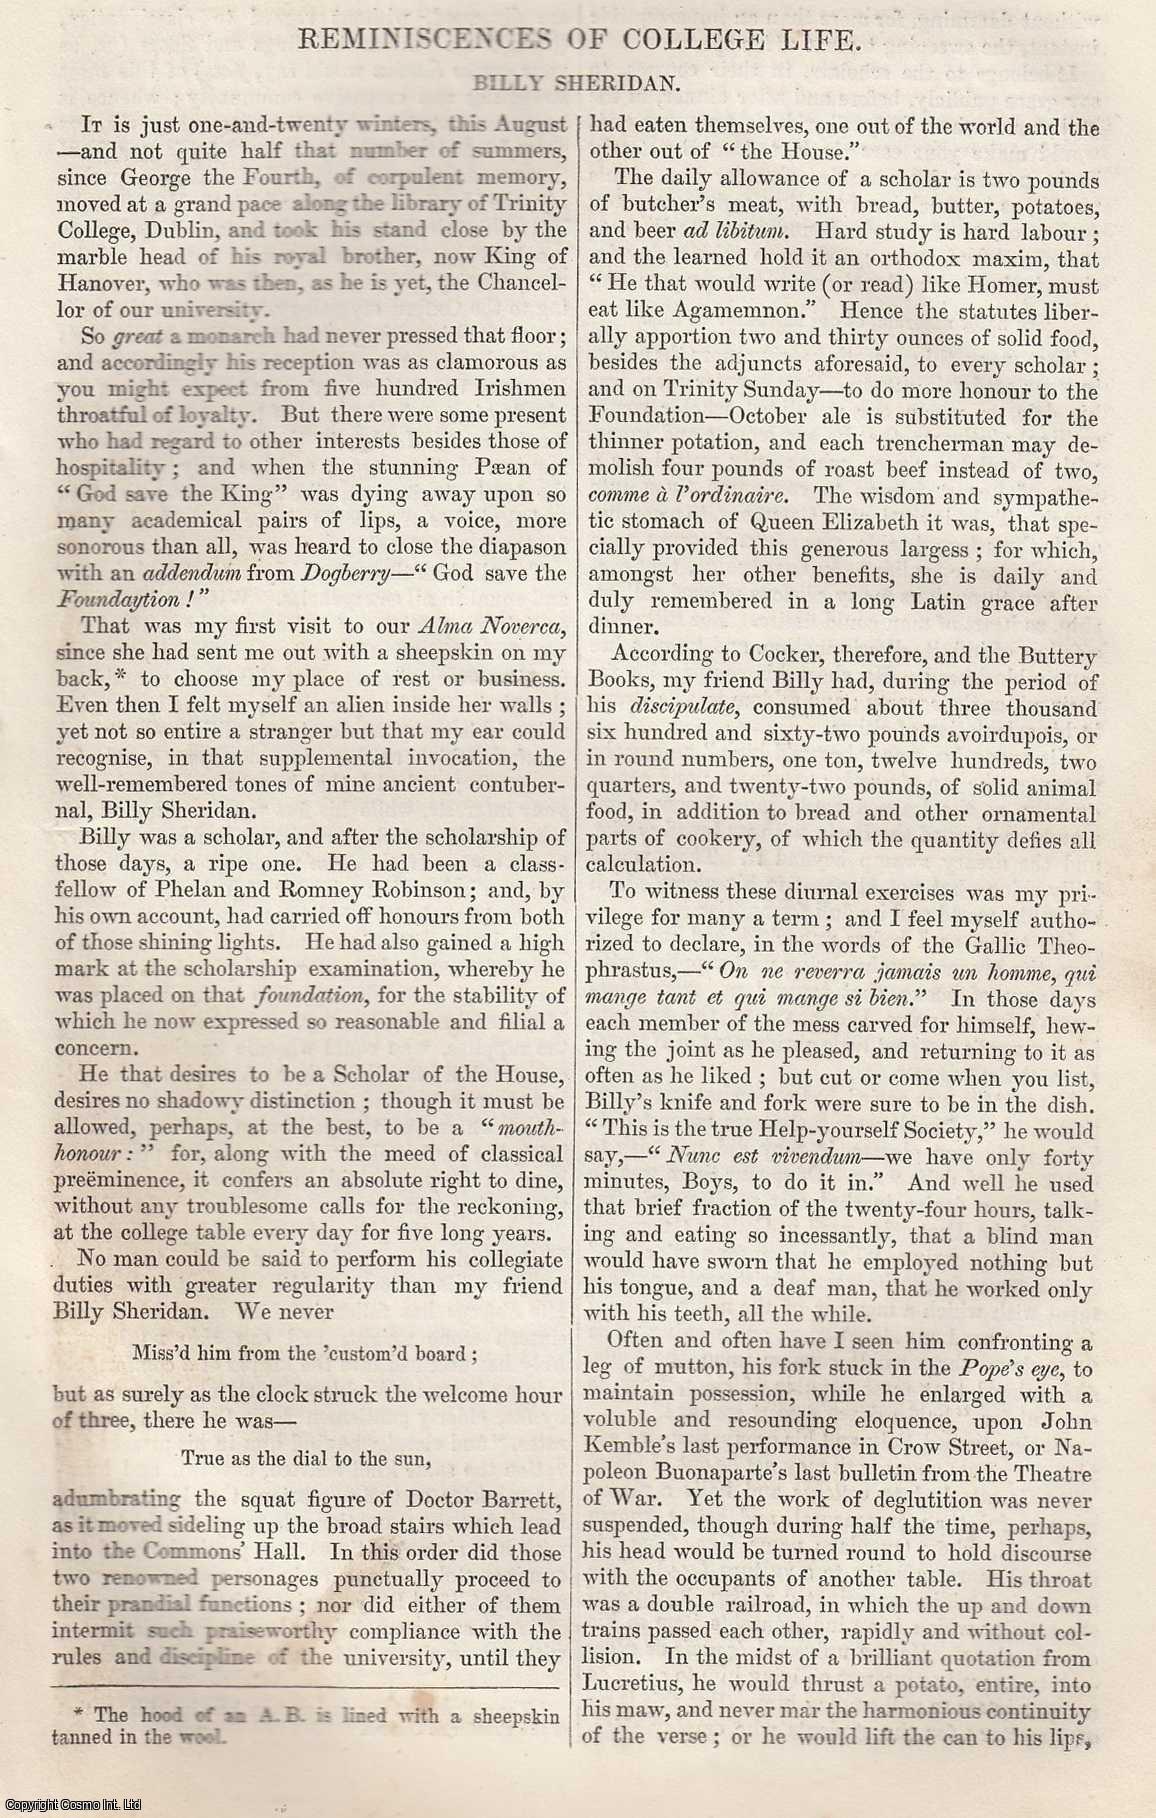 --- - Reminiscences of Dublin College Life (No. 1). An original article from Tait's Edinburgh Magazine, 1842.